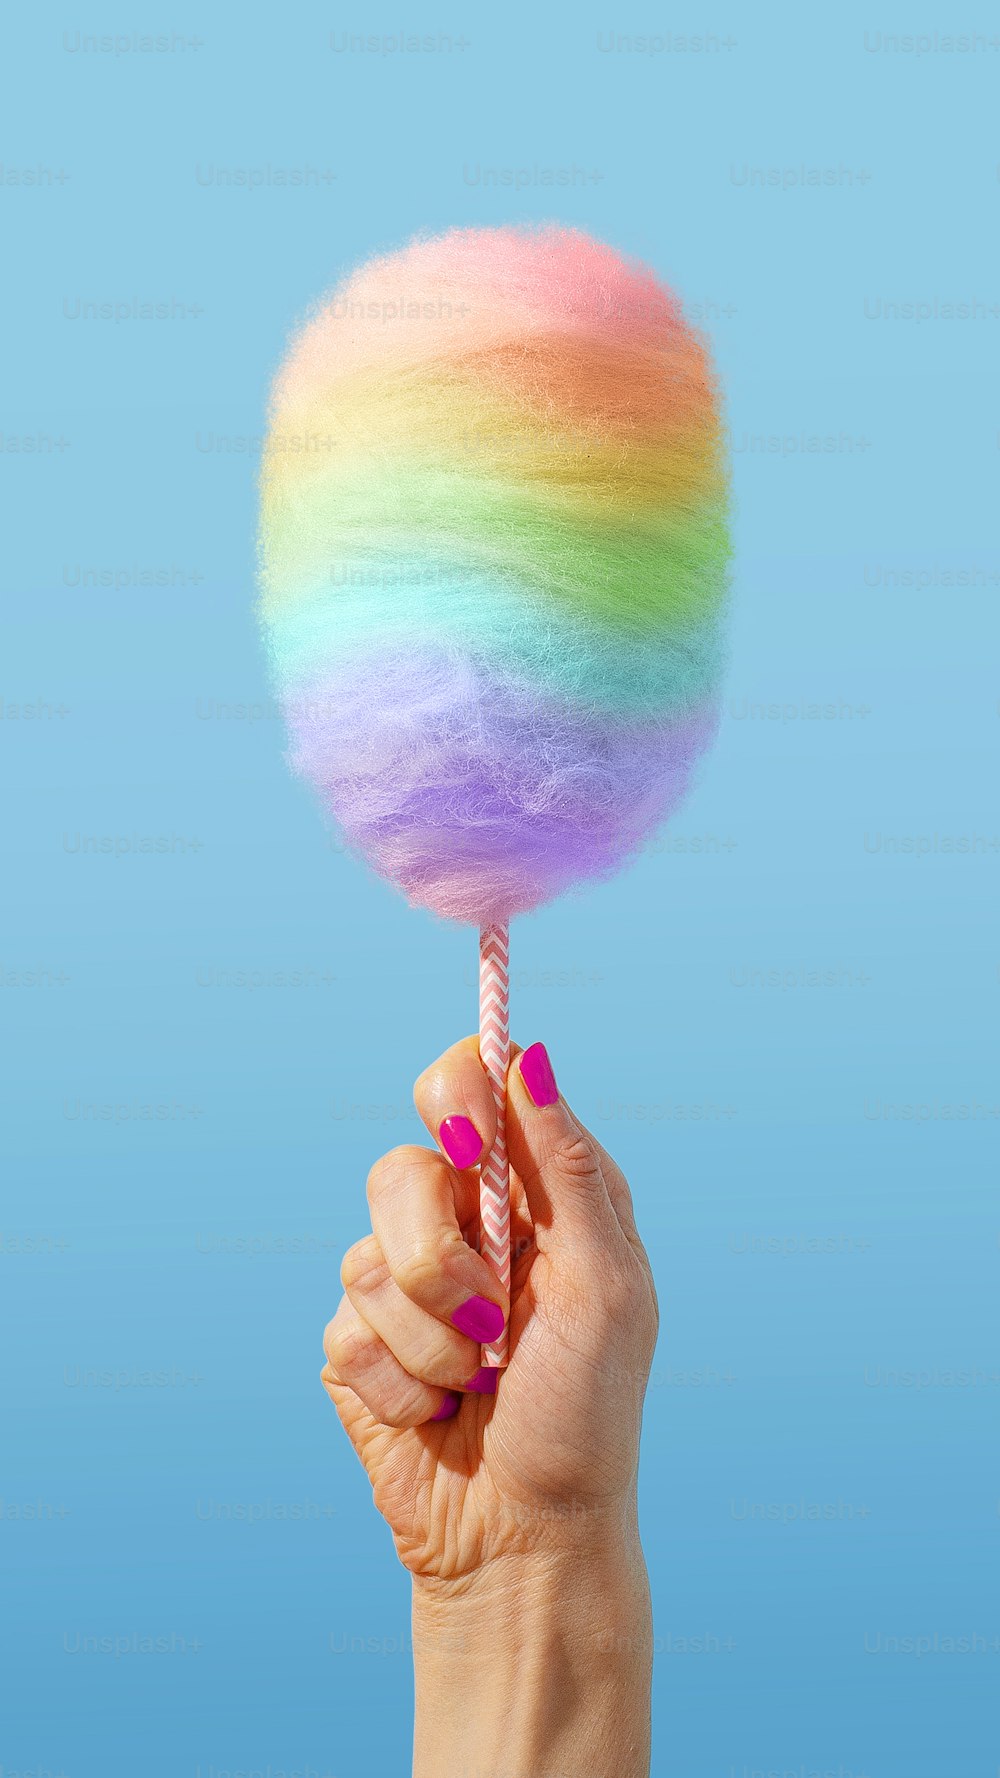 cotton candy photo shoot